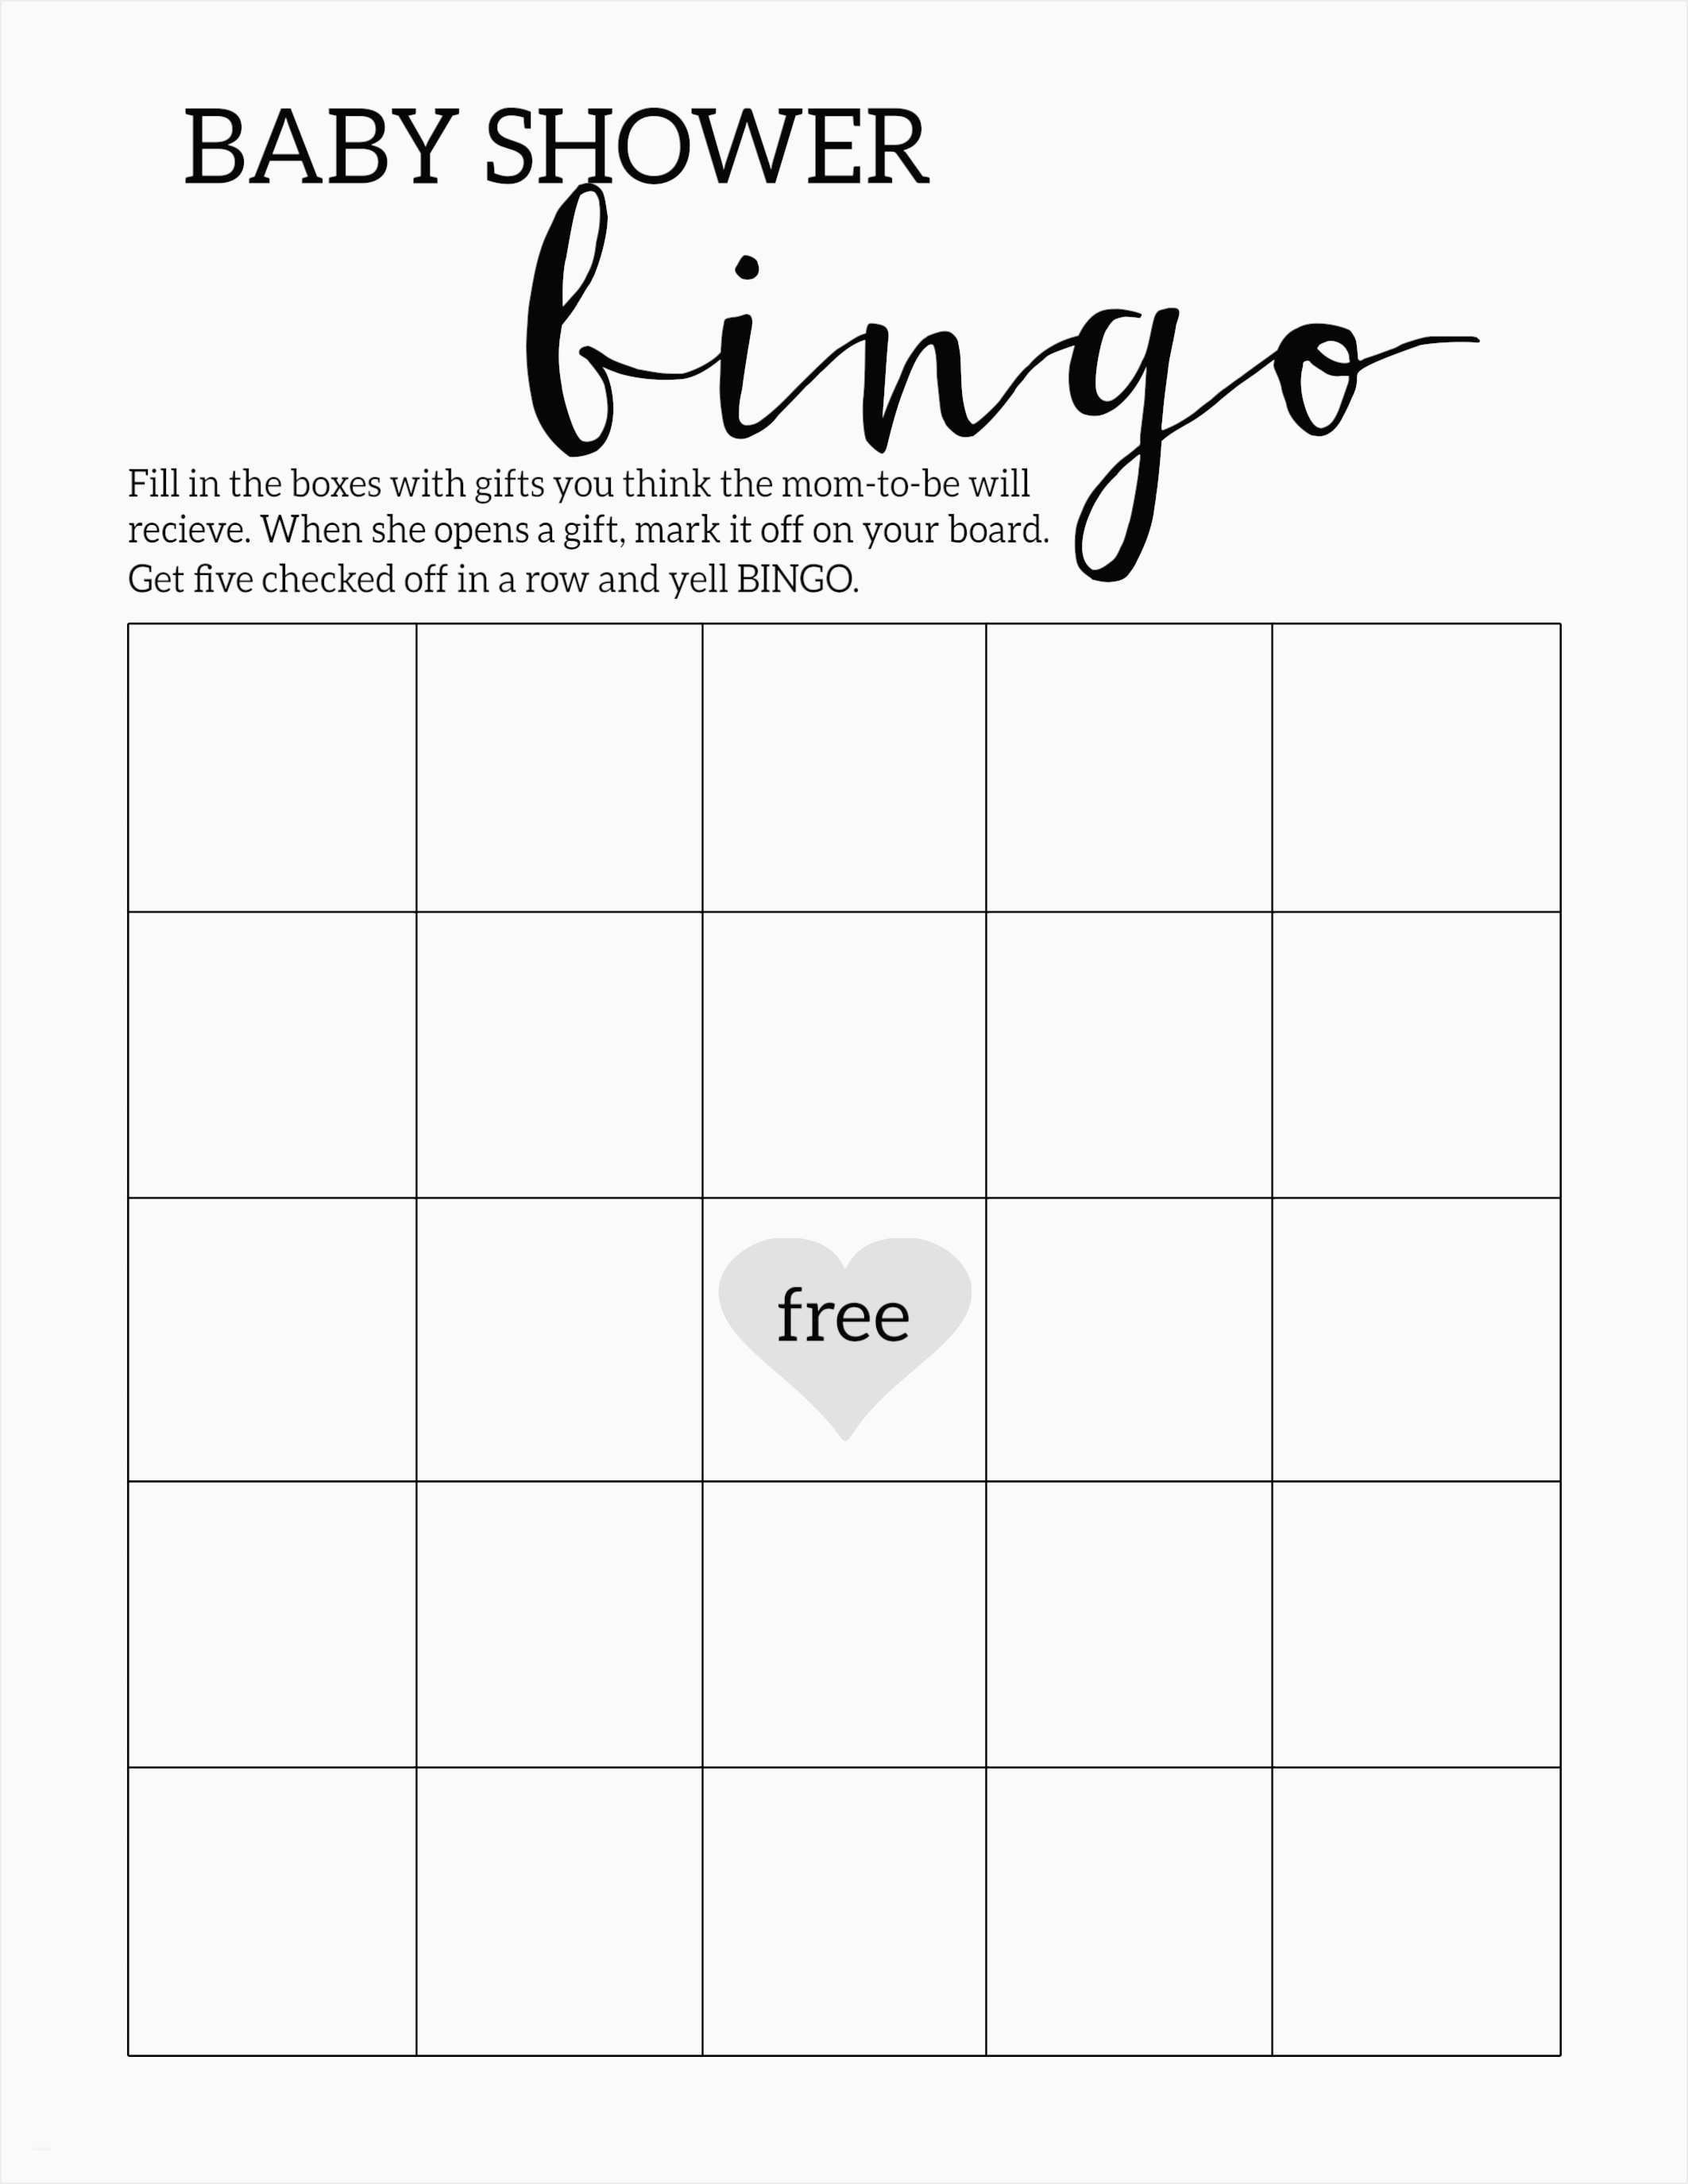 Blank Bingo Card Template Microsoft Word Beautiful Cool Of with Blank Bingo Card Template Microsoft Word